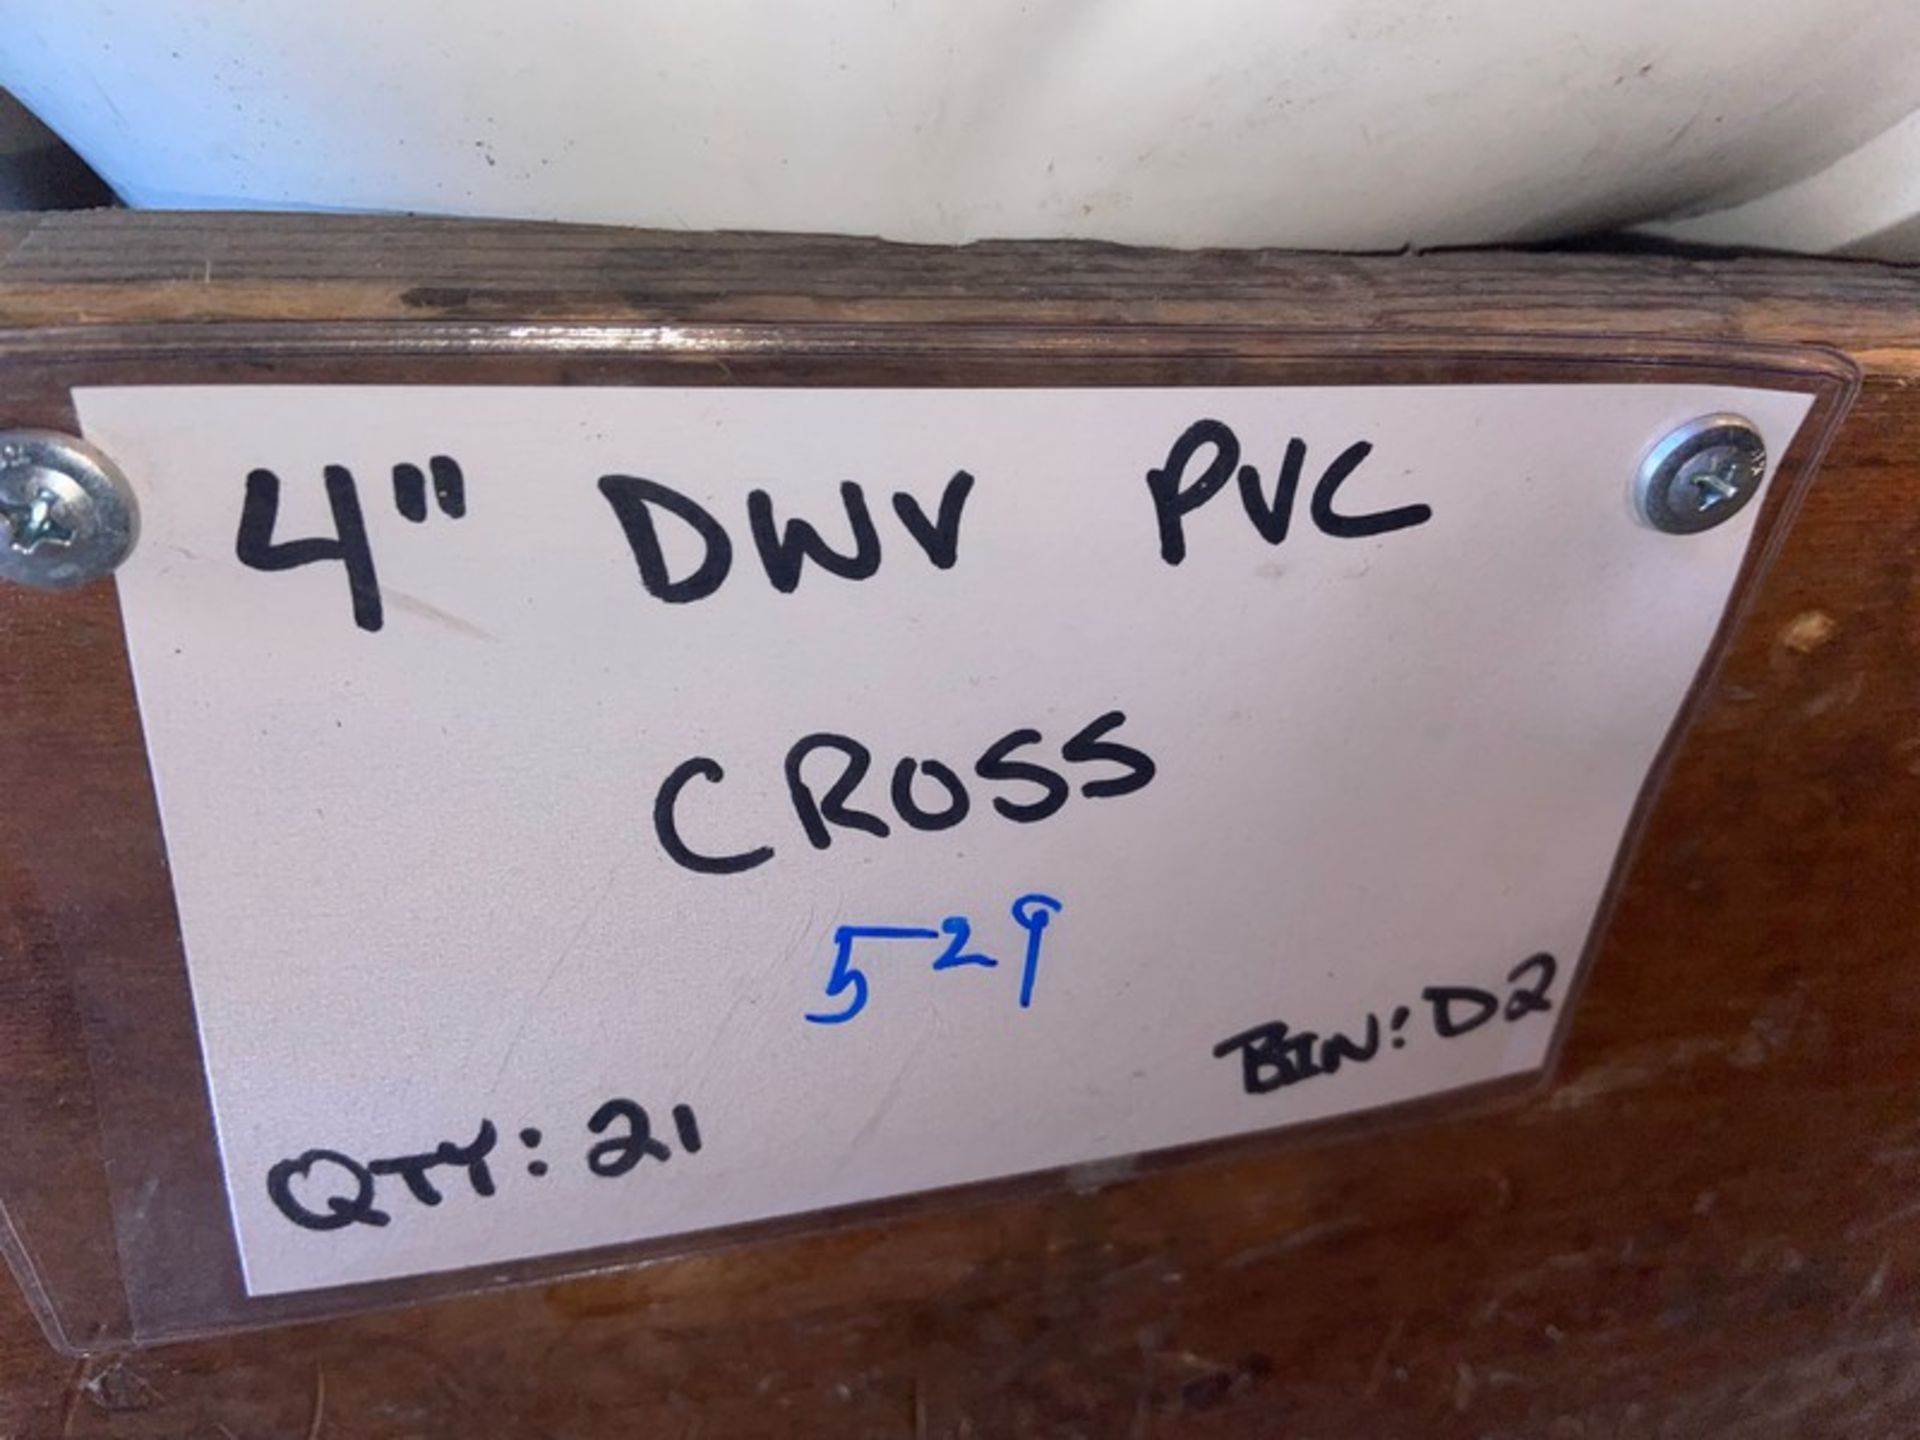 (21) 4” DWV OCC CROSS (Bin:D2) (LOCATED IN MONROEVILLE, PA) - Image 4 of 4